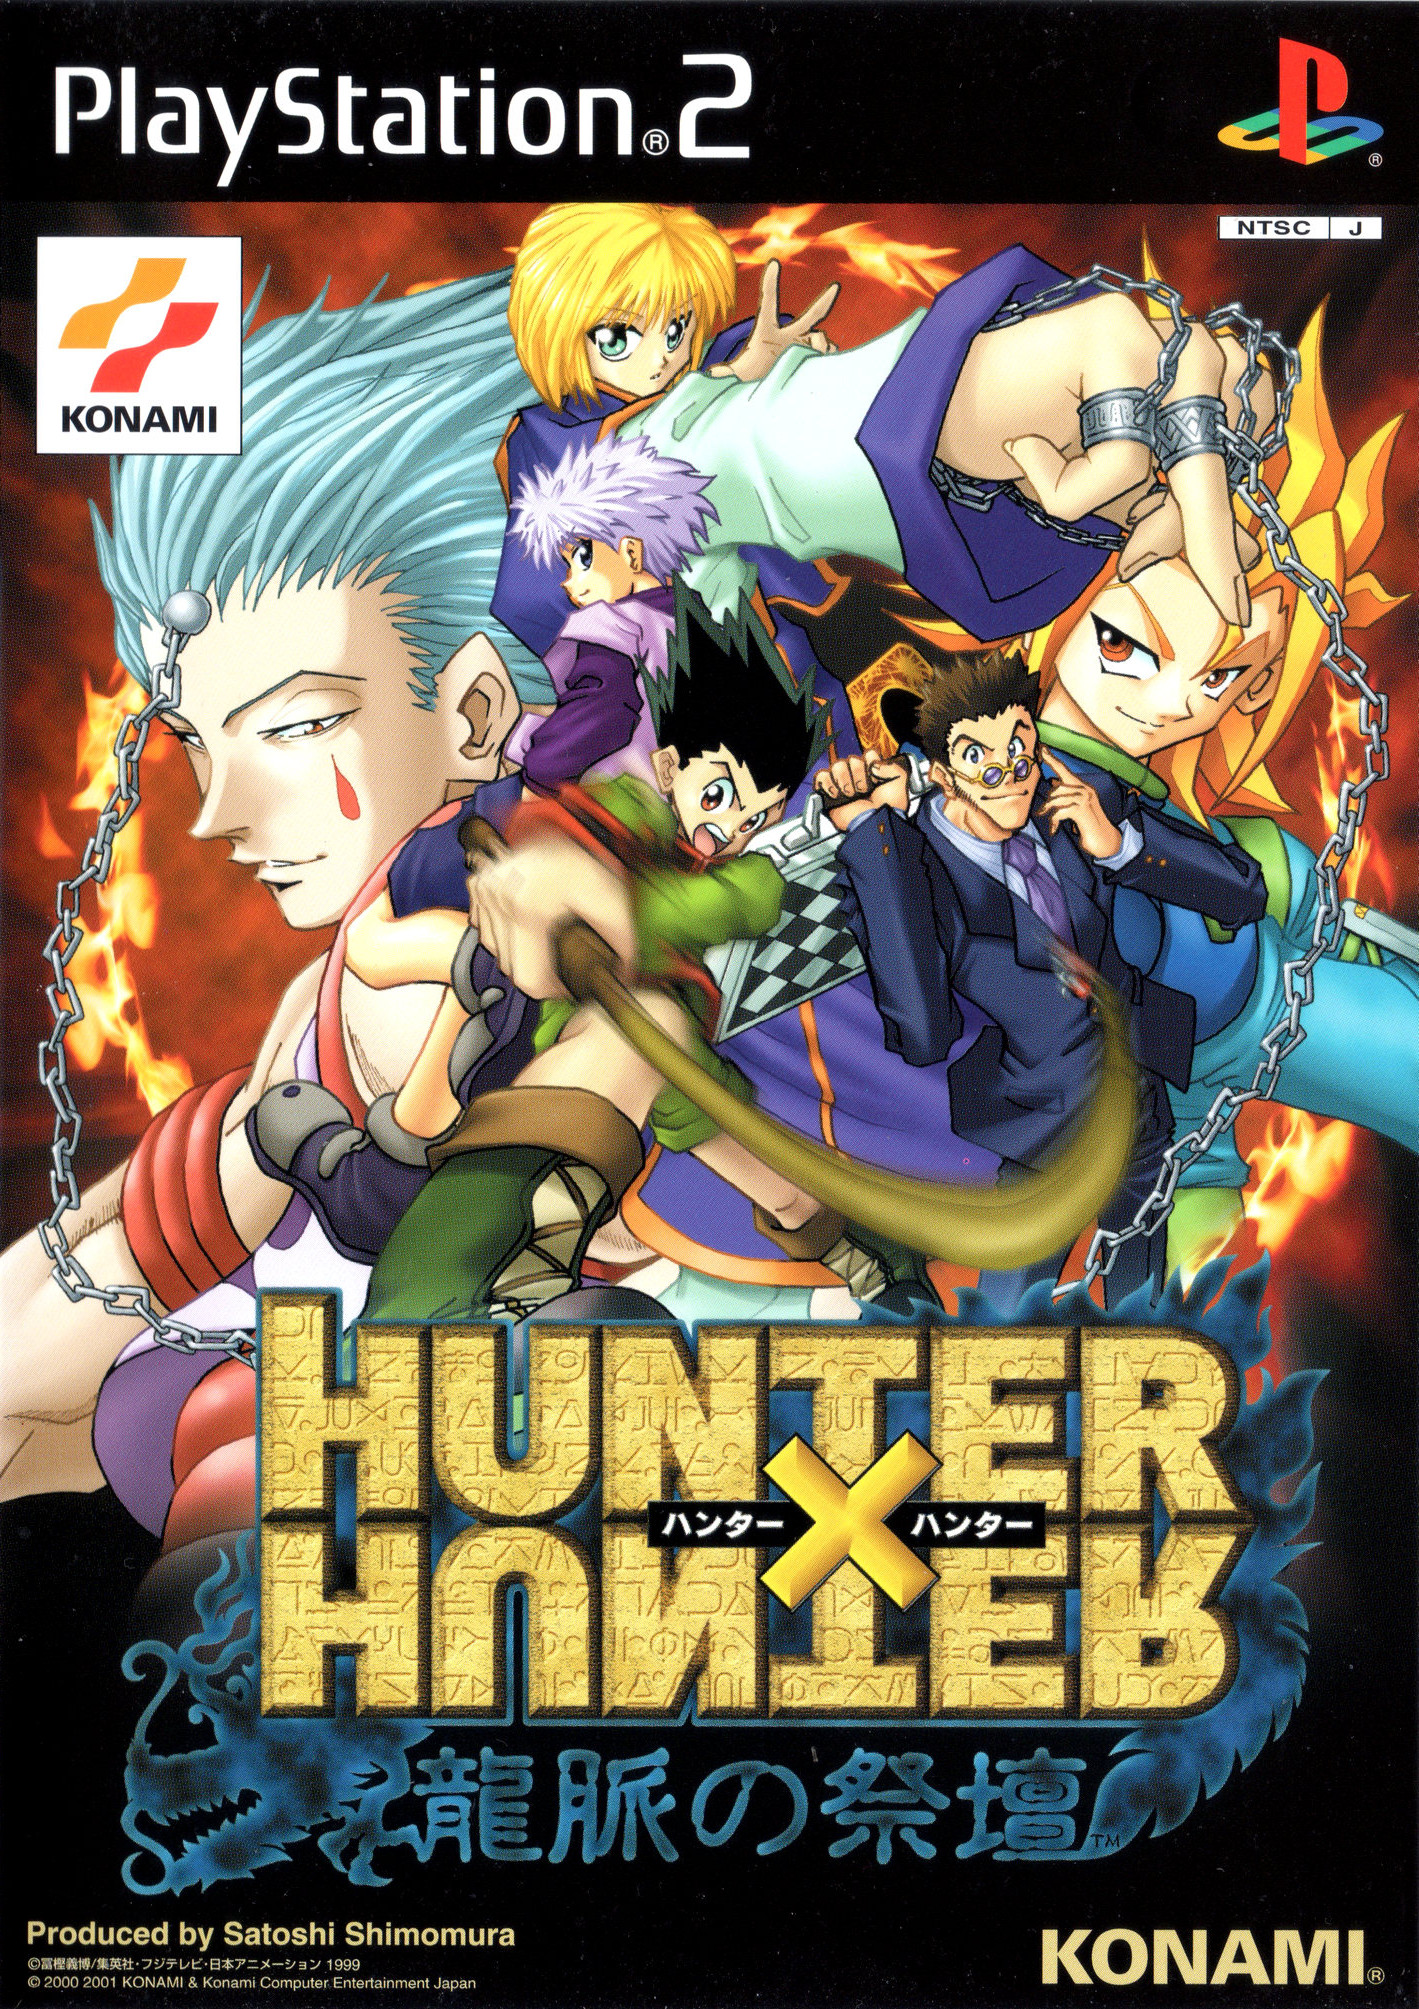 NEW HUNTER X HUNTER GAME! - Hunter x Hunter World Hunt: Open Beta 